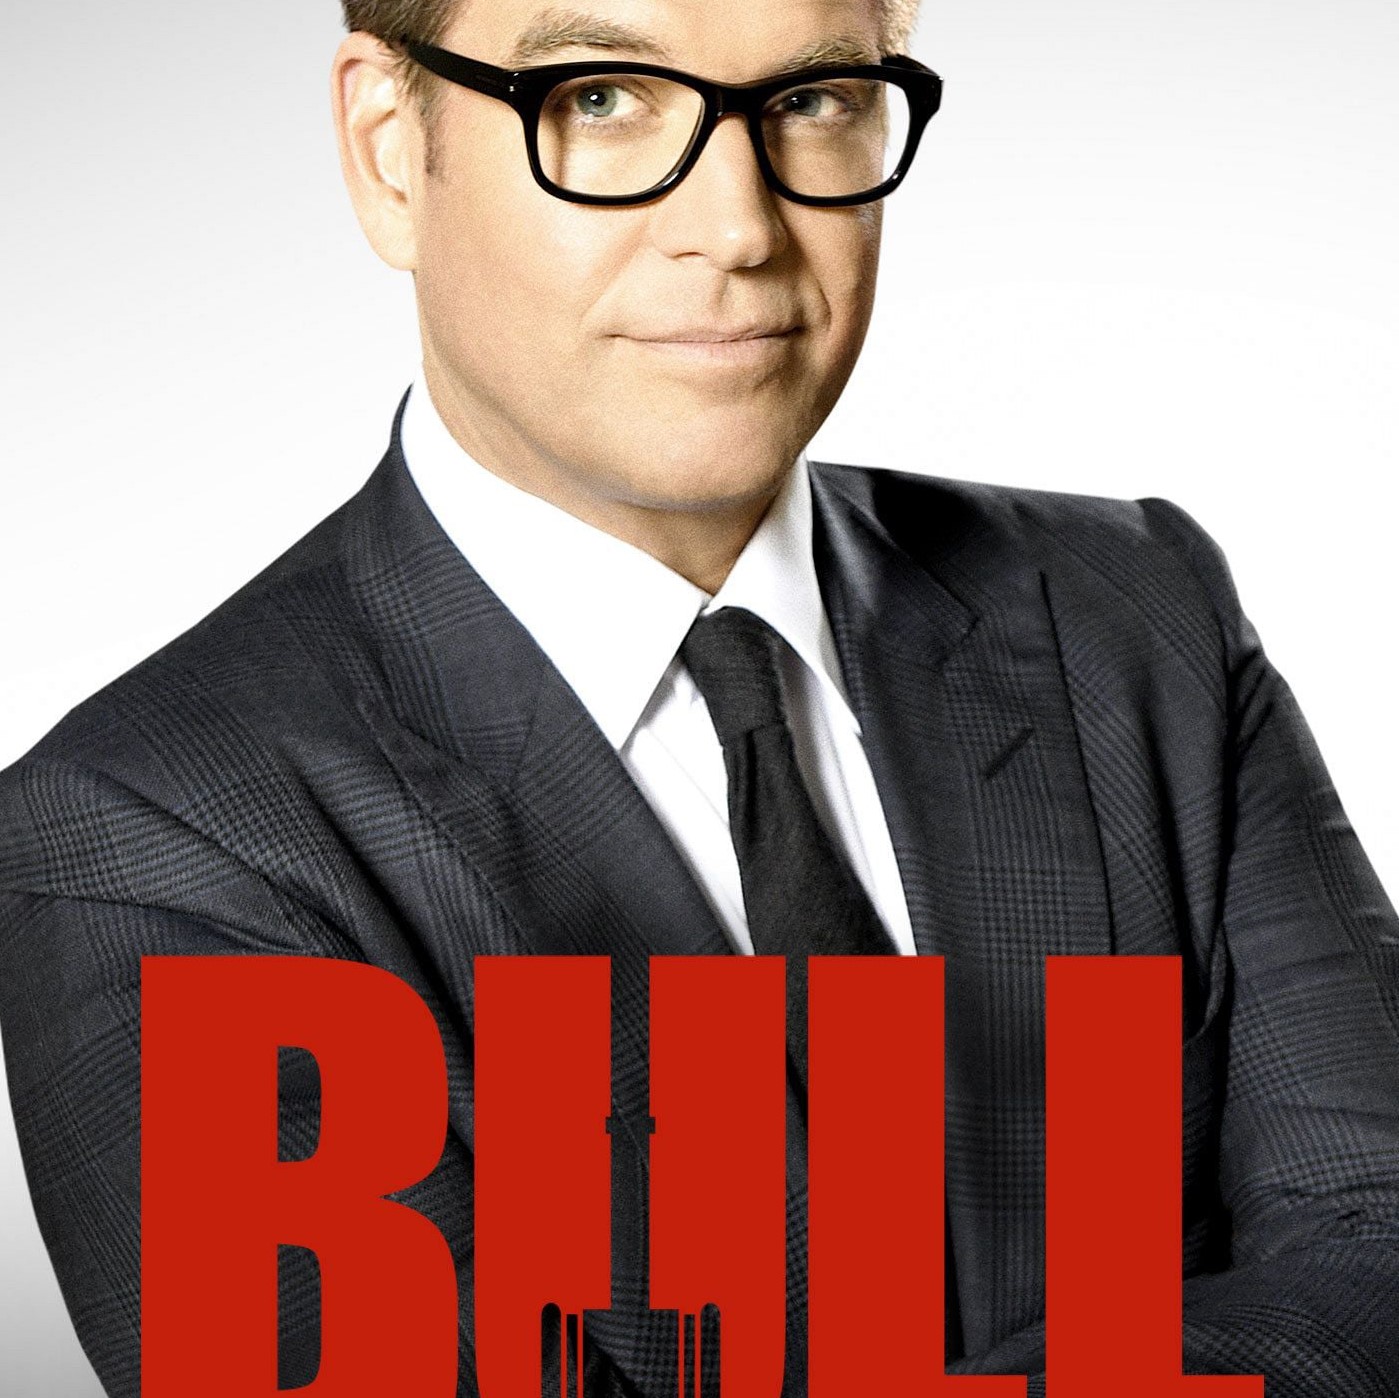 Bull television series